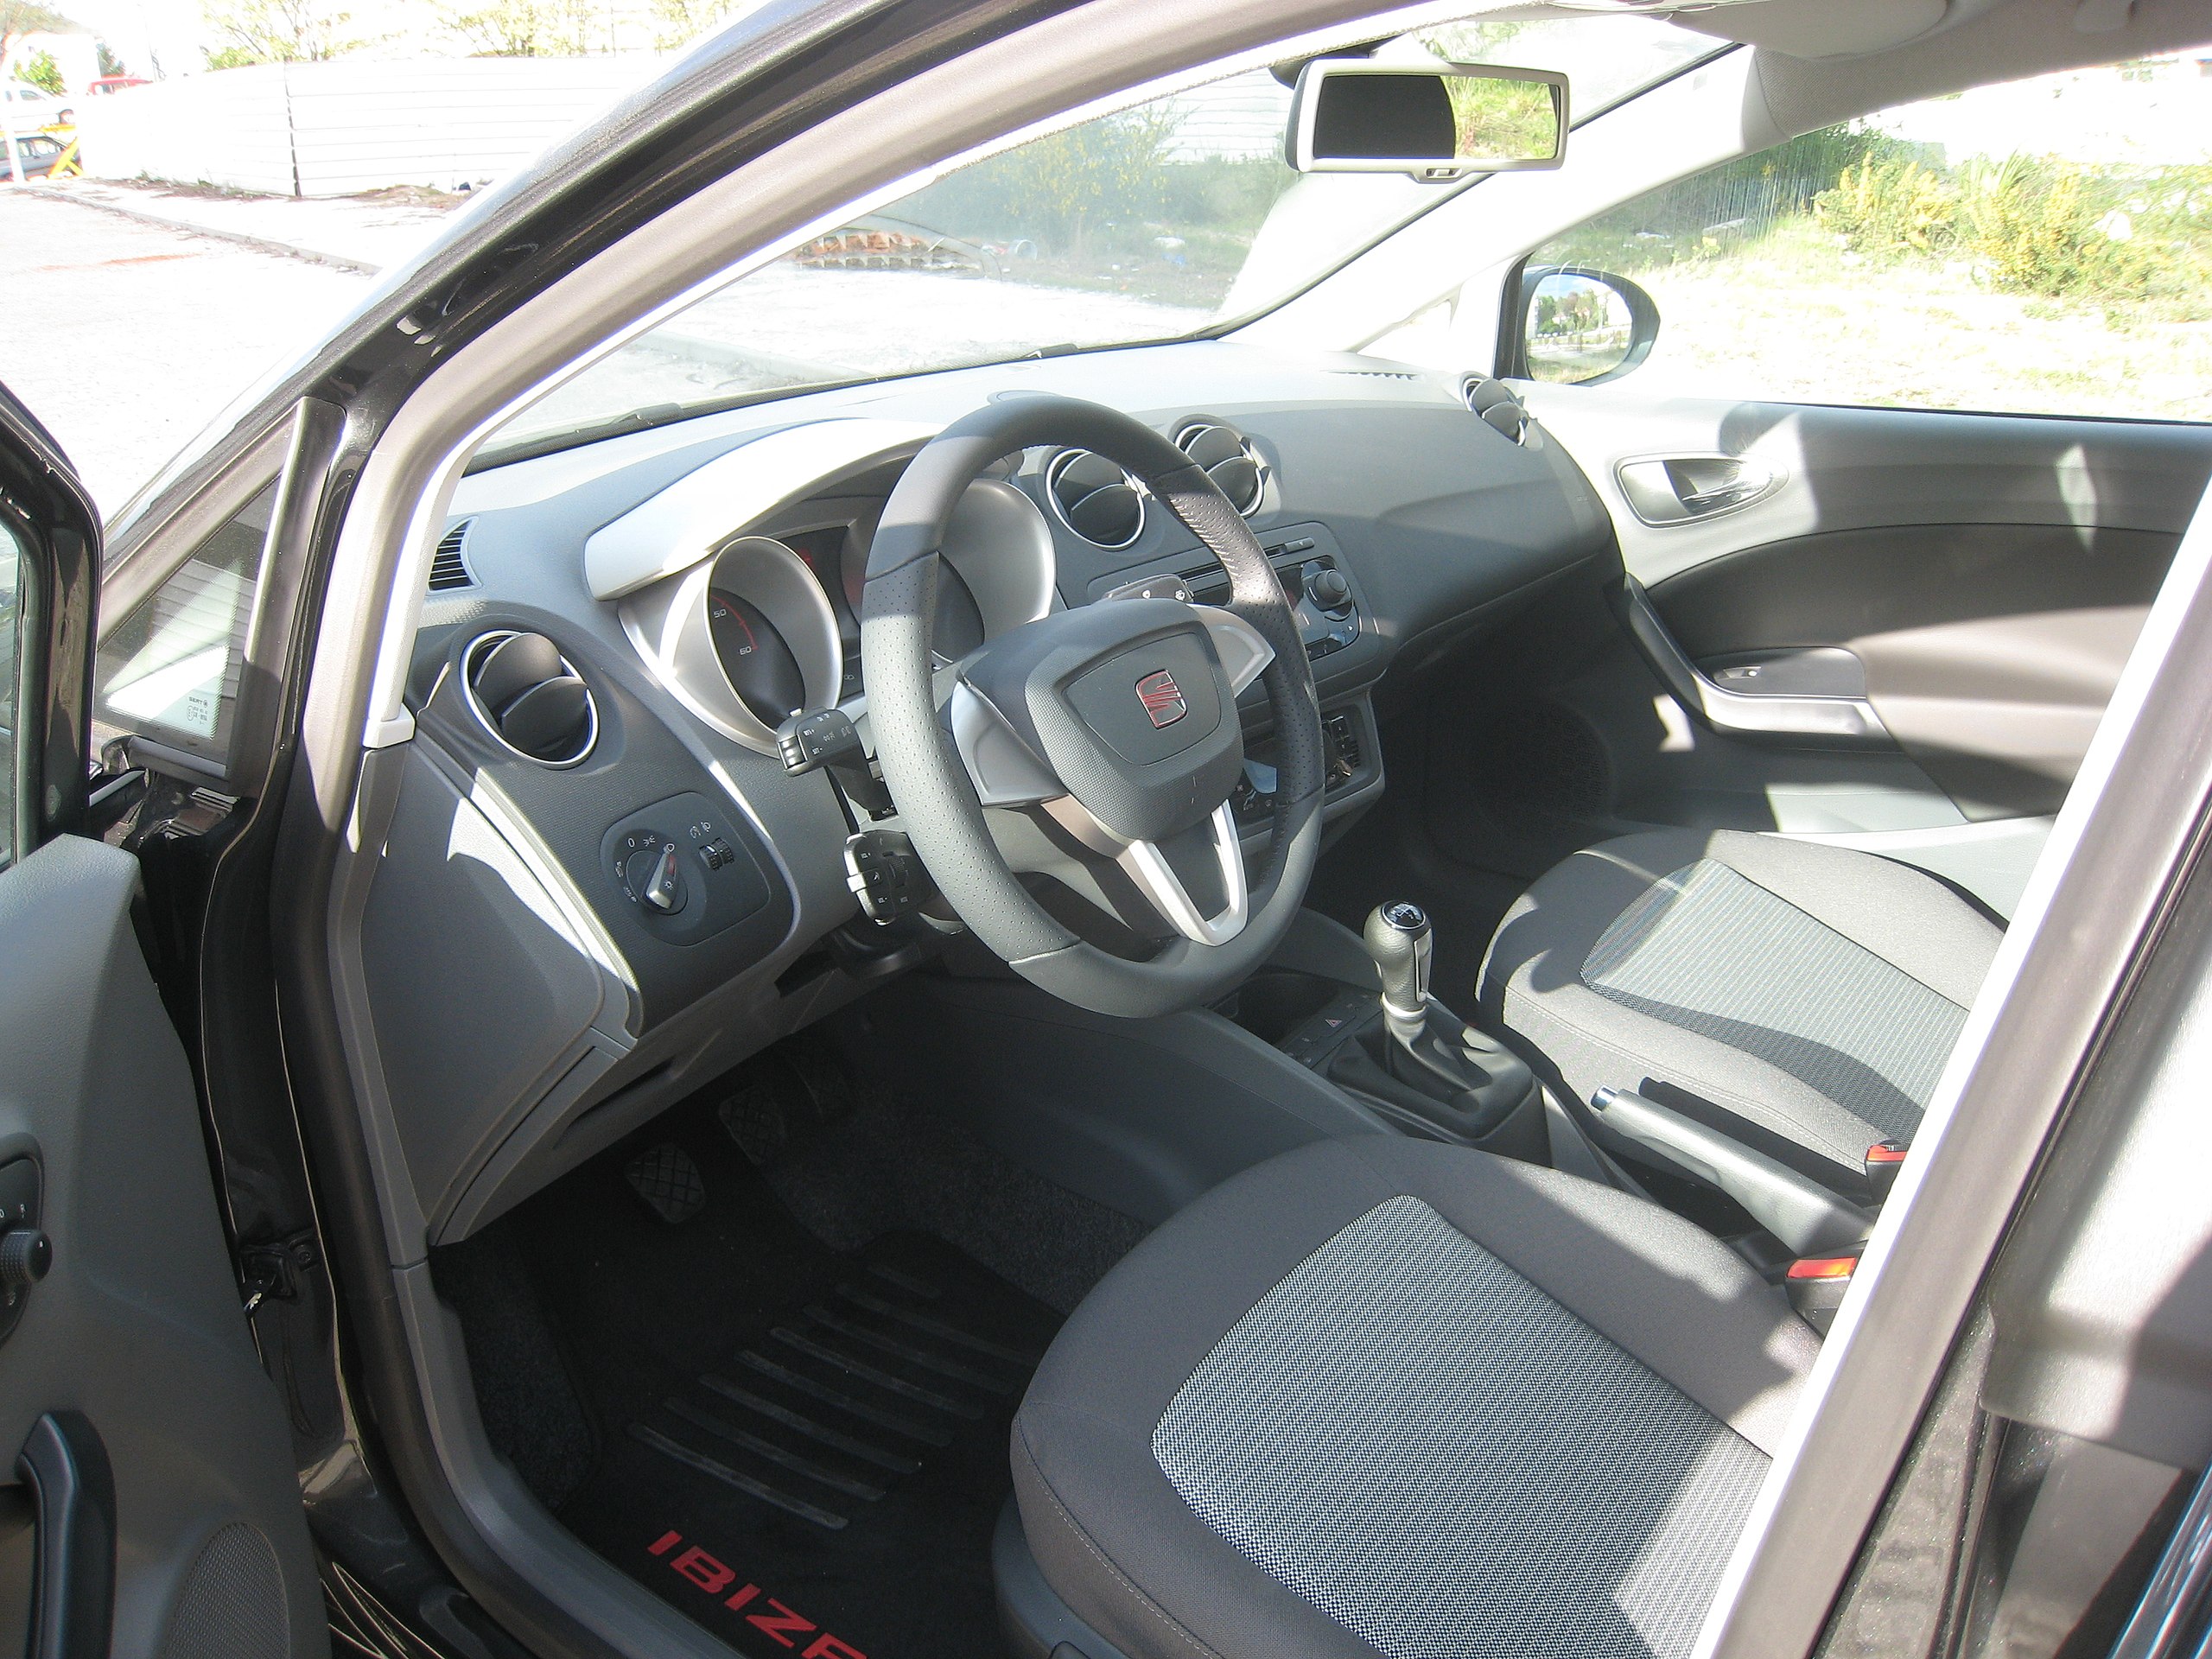 File:SEAT Ibiza 6J interior side view.jpg Wikipedia